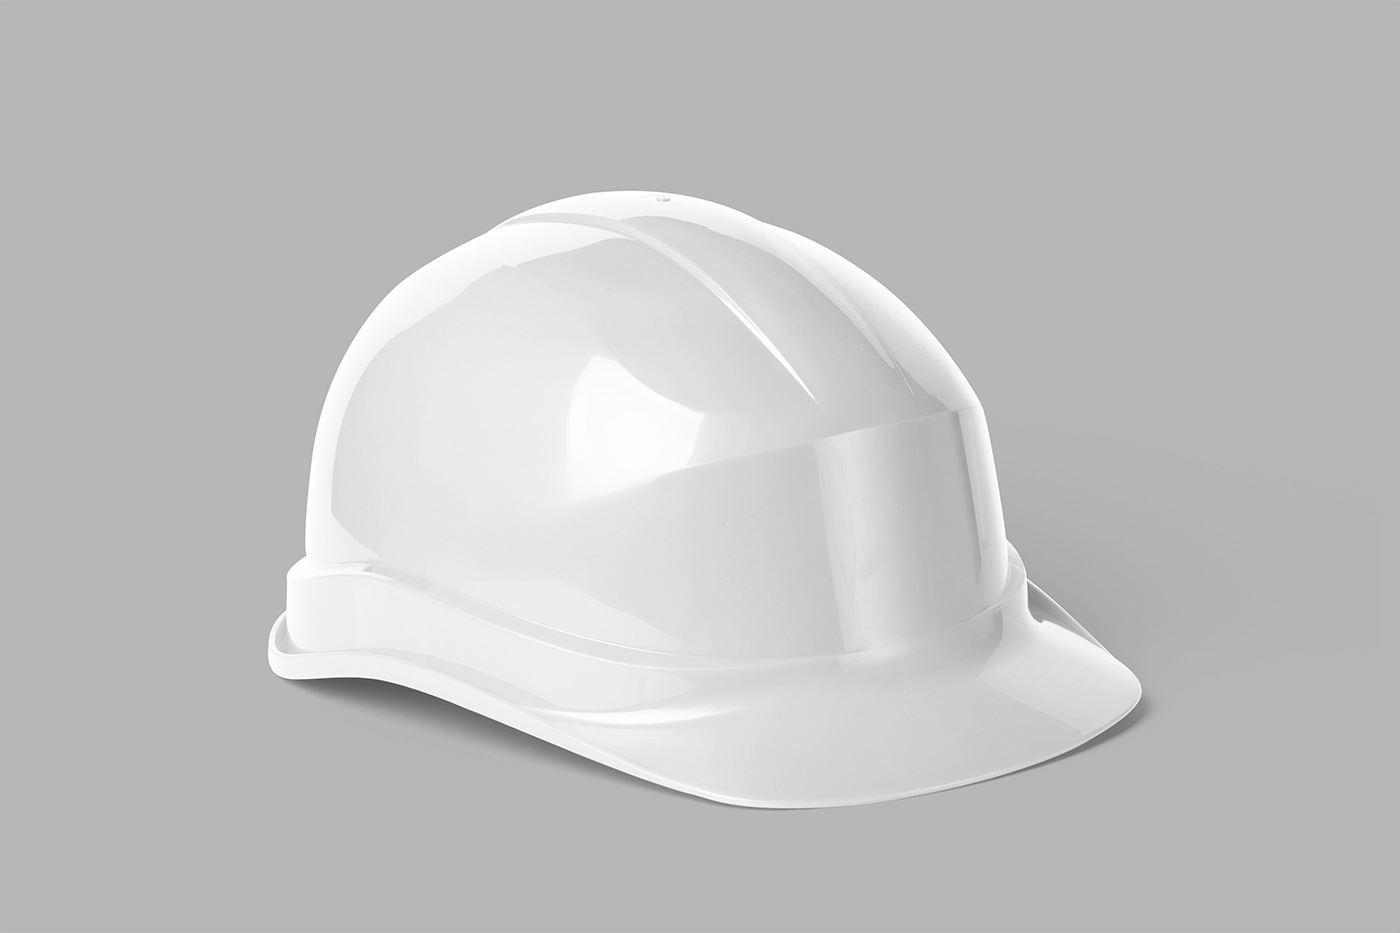 Download Free Construction Helmet Mockup On Behance